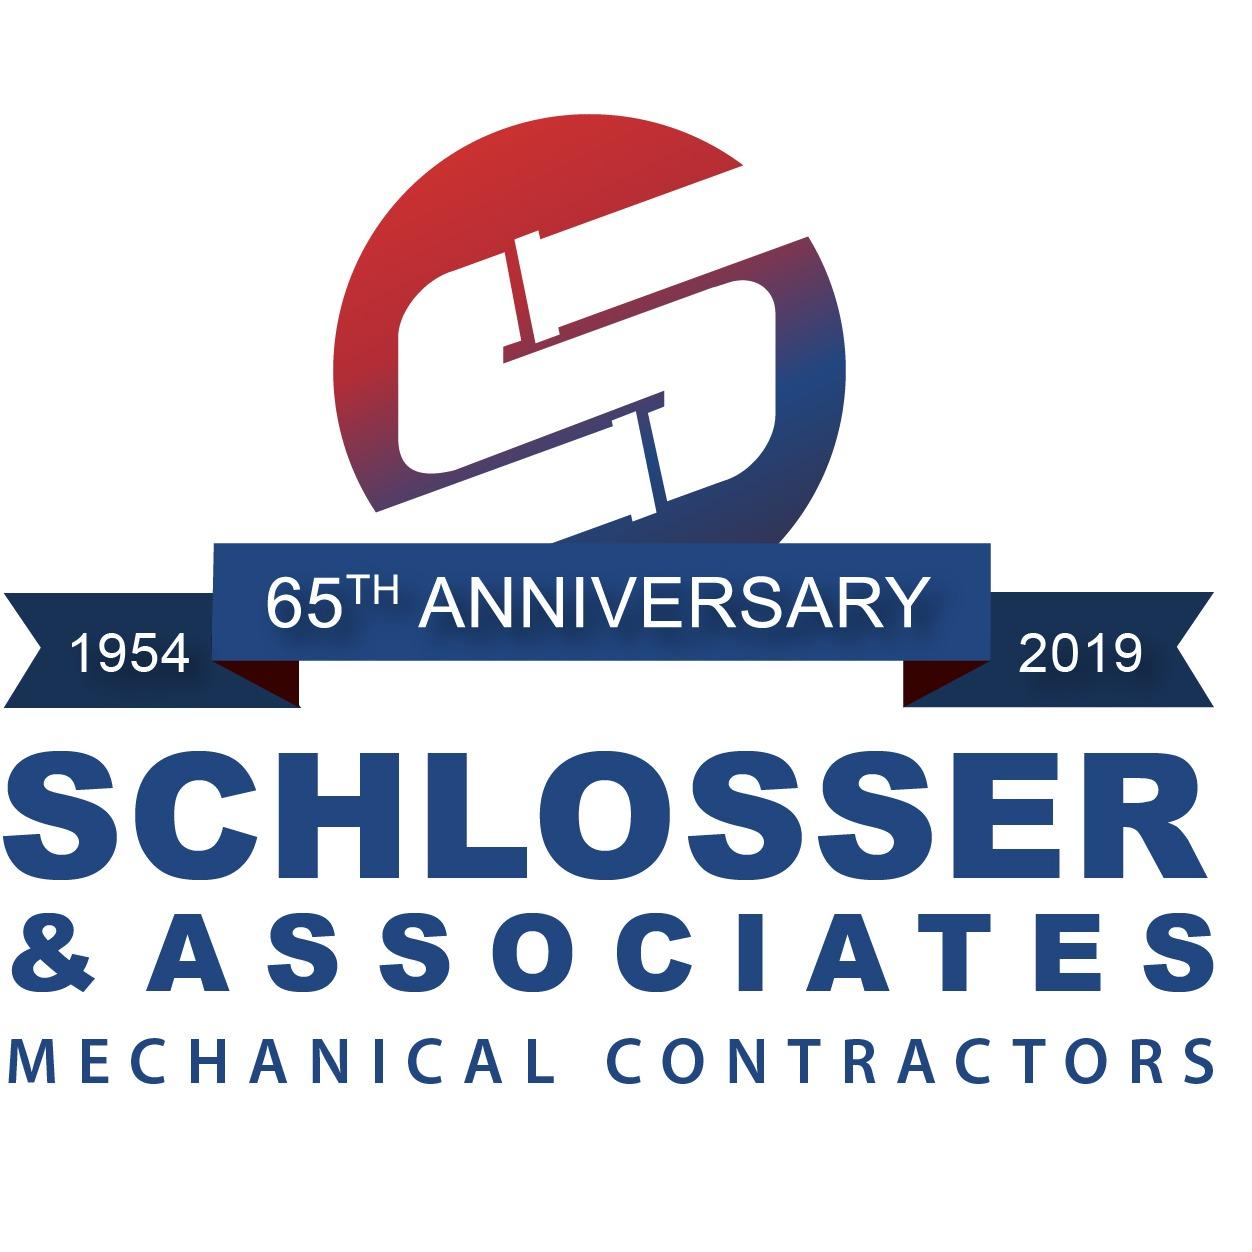 Schlosser & Associates Mechanical Contractors - Newark, DE 19702 - (302)738-7333 | ShowMeLocal.com